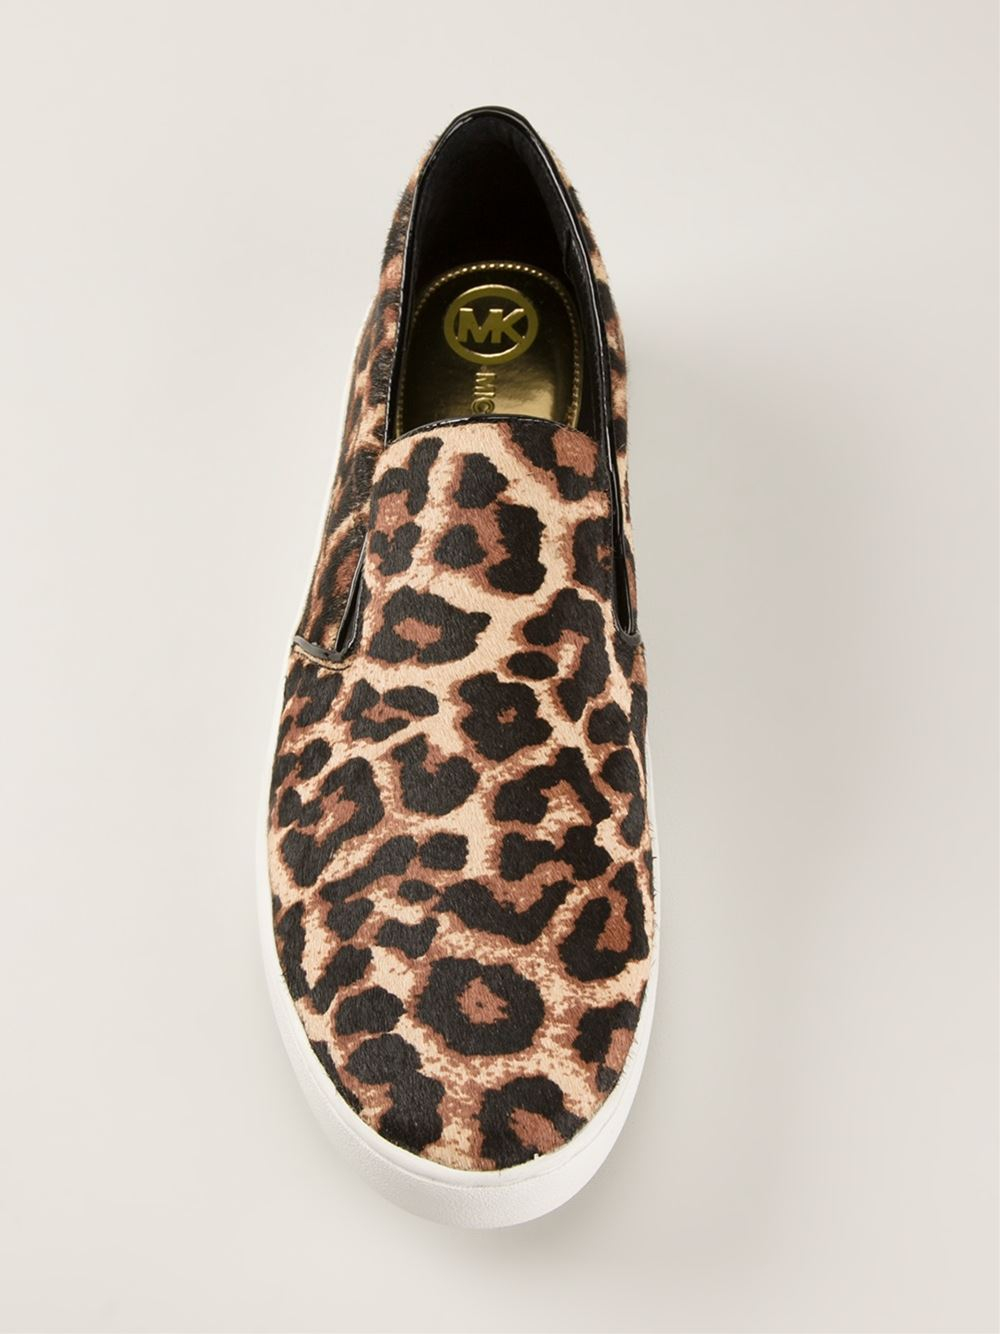 Michael Kors Keaton Leopard Print Slipon Sneakers in Black - Lyst